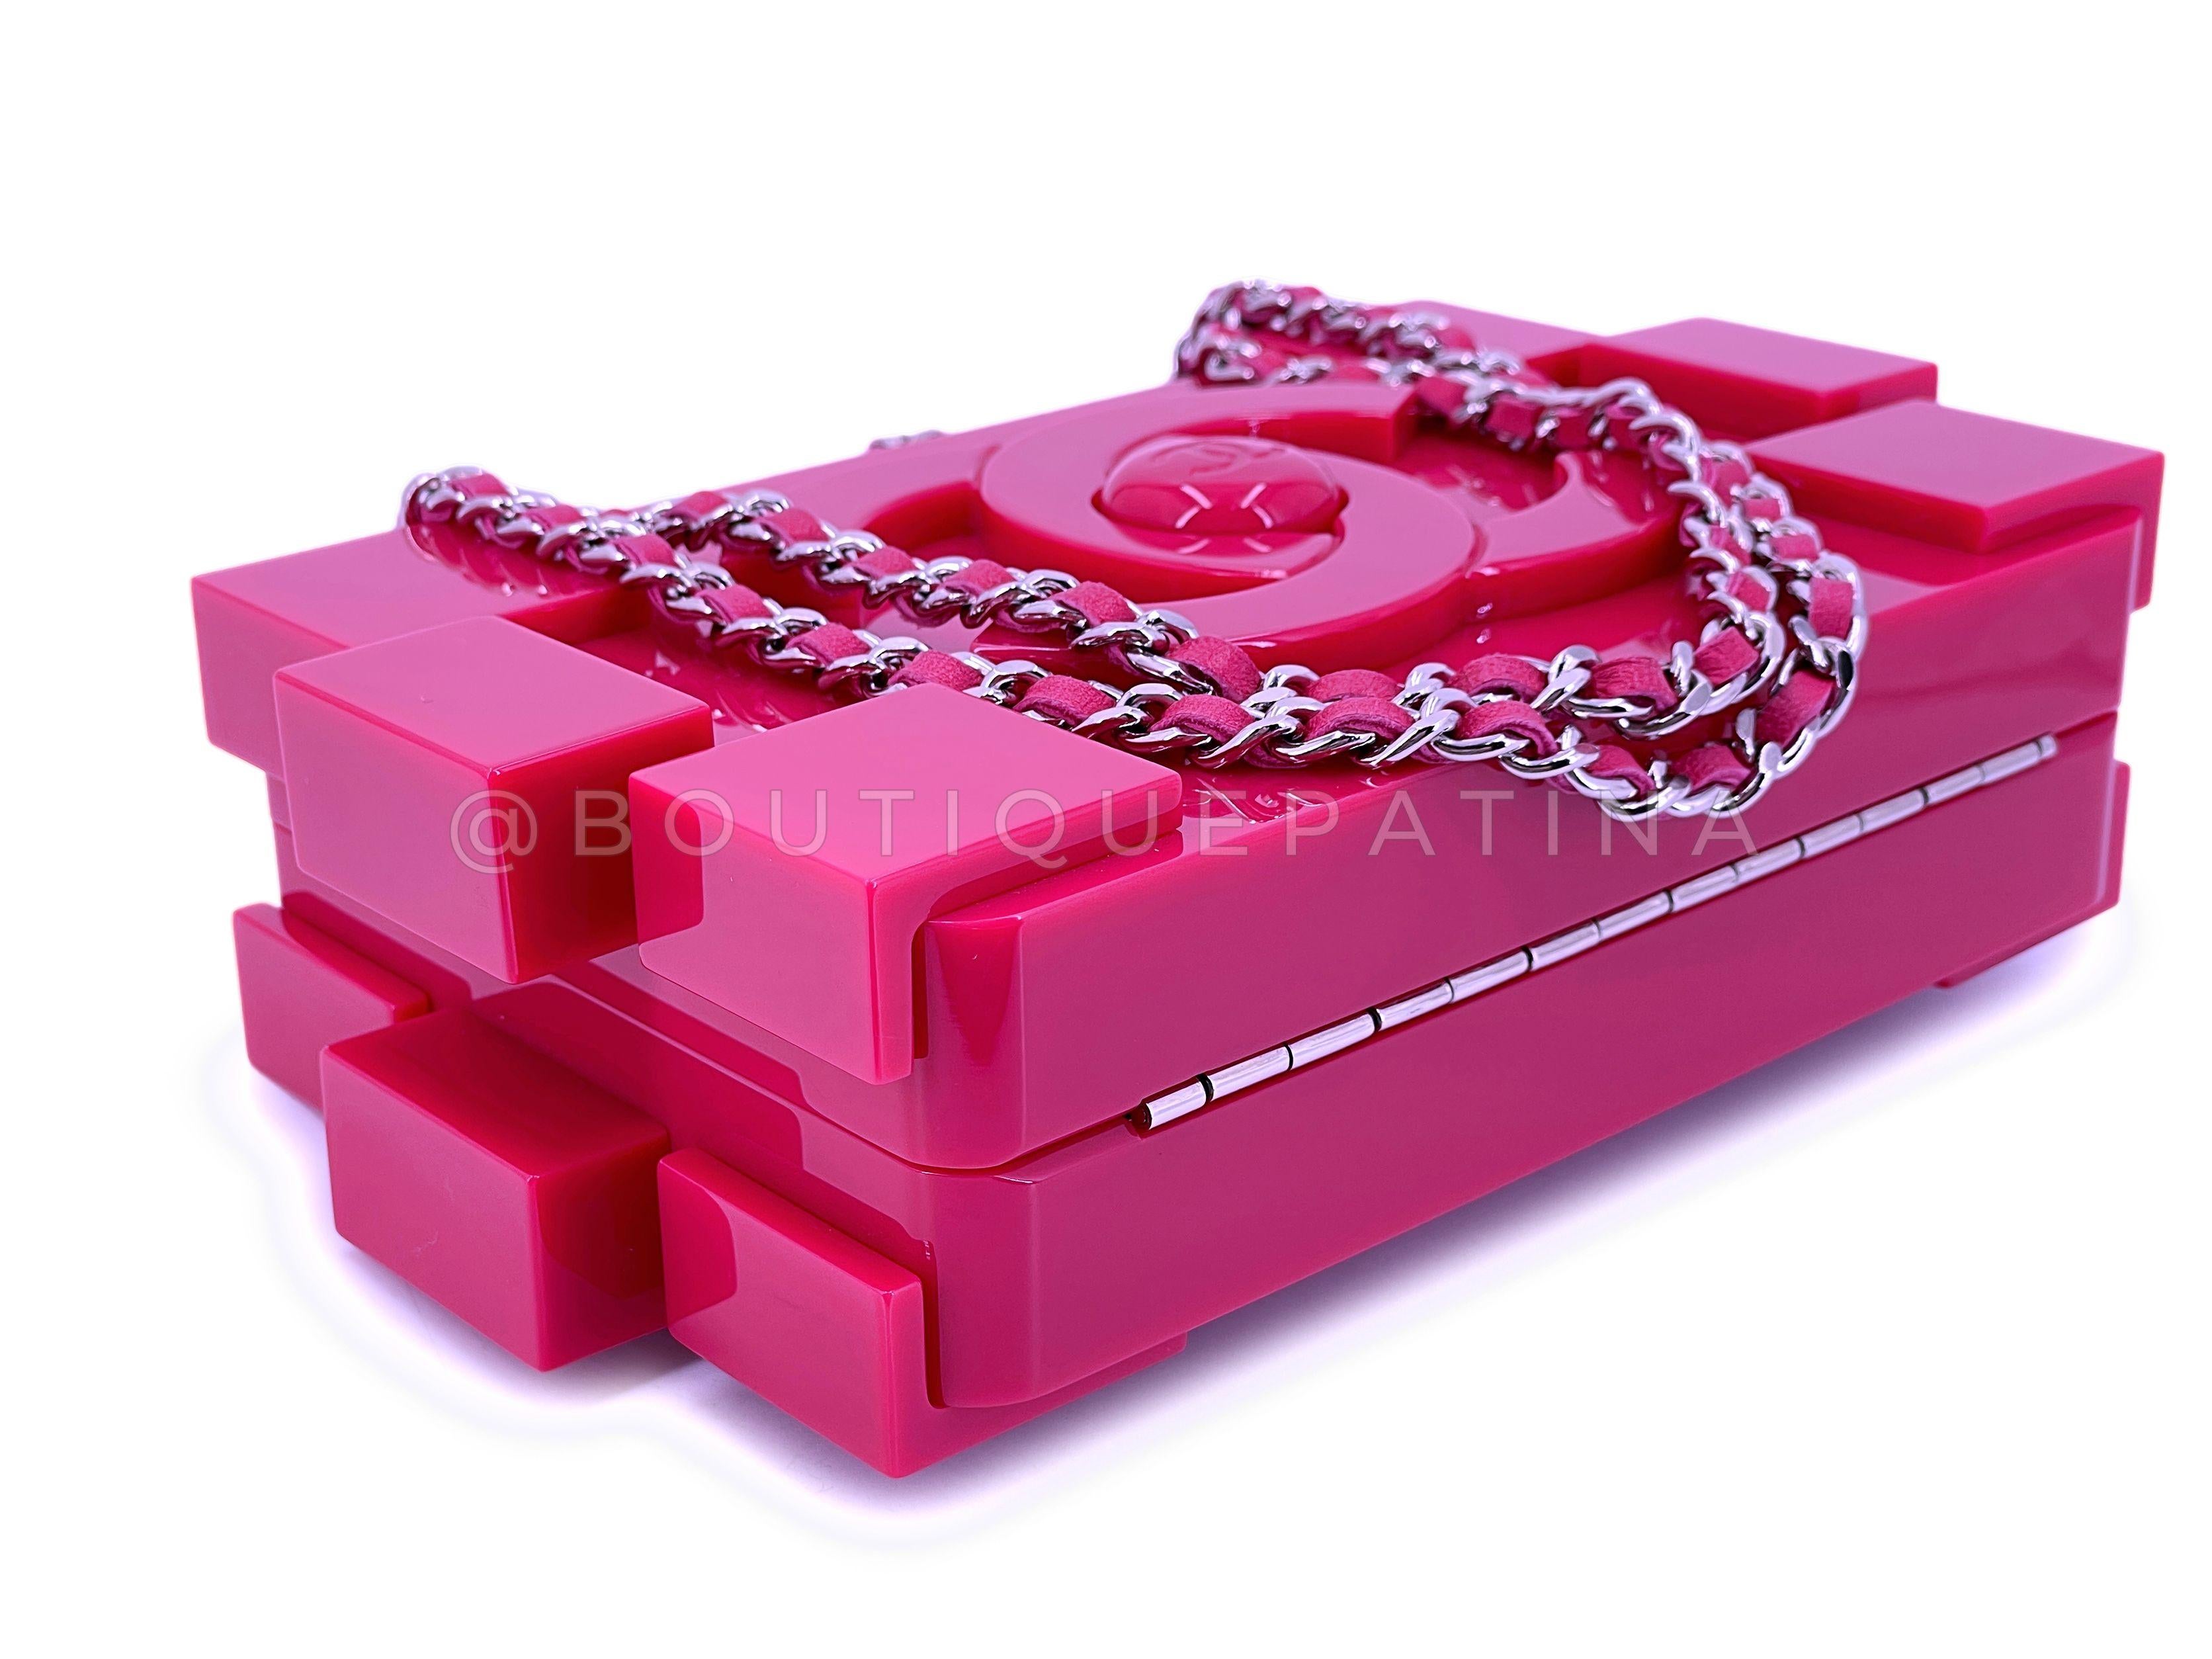 Chanel 2014 Pink Lego Brick Minaudière Plexiglass Clutch Shoulder Bag RHW 67522 For Sale 2